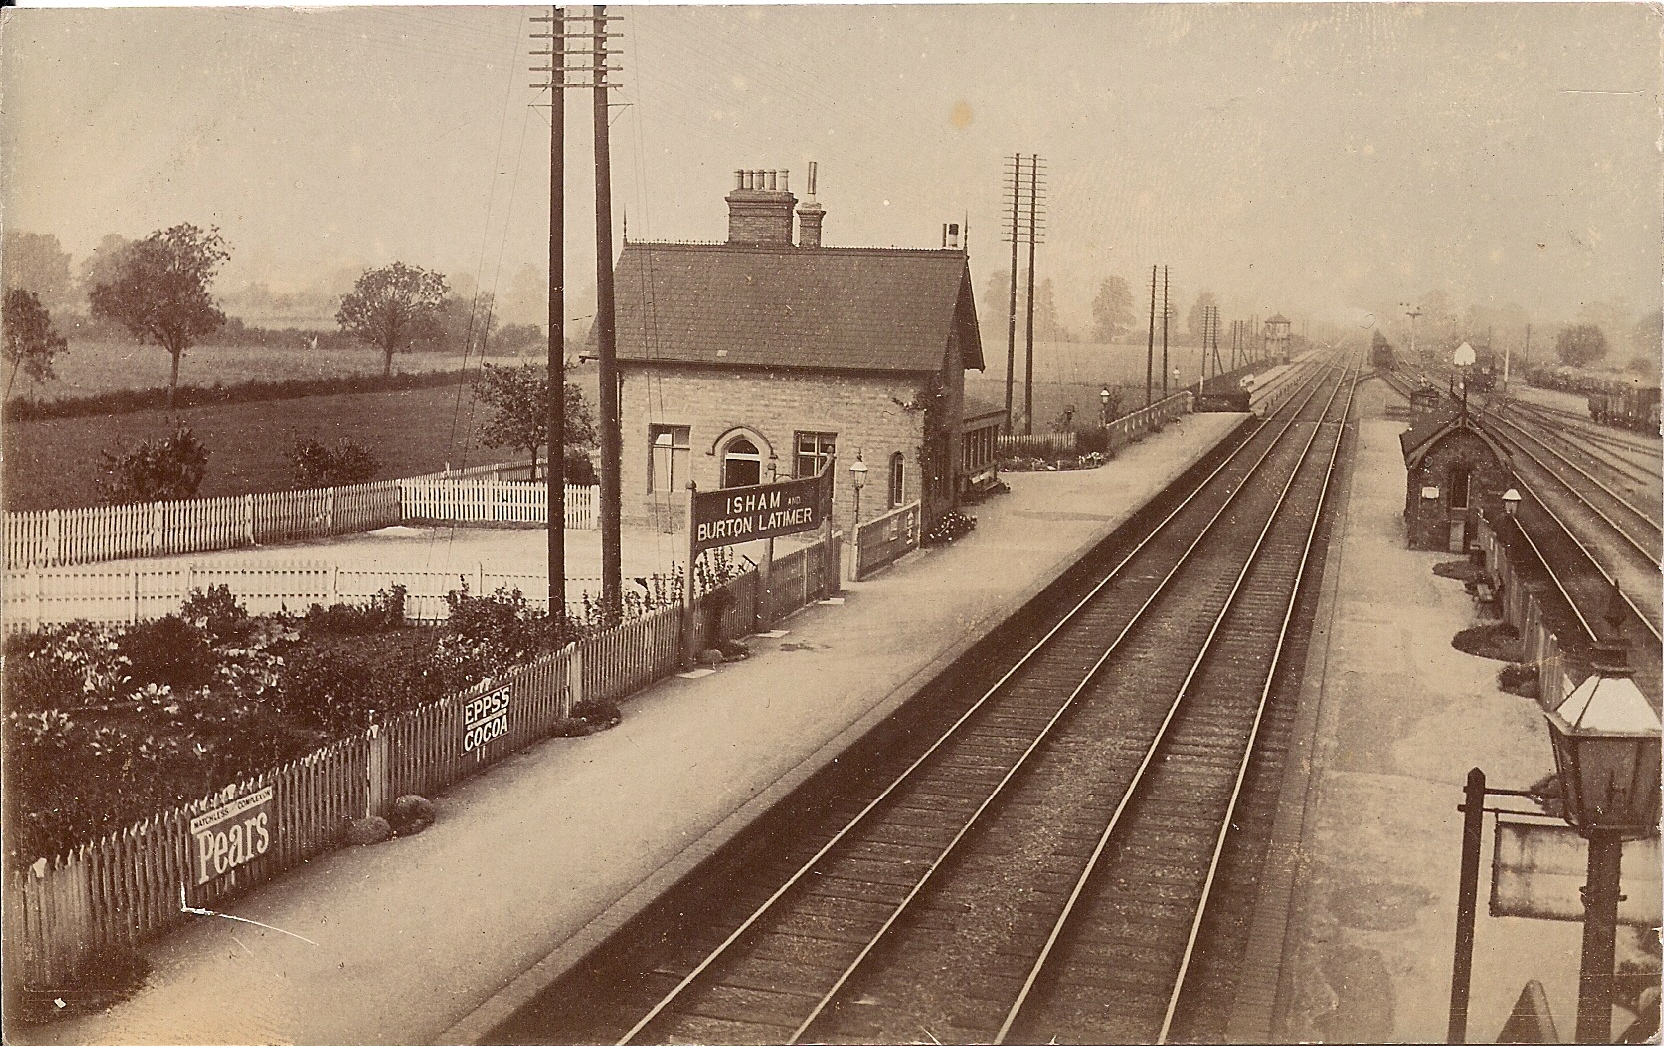 Isham and Burton Latimer railway station